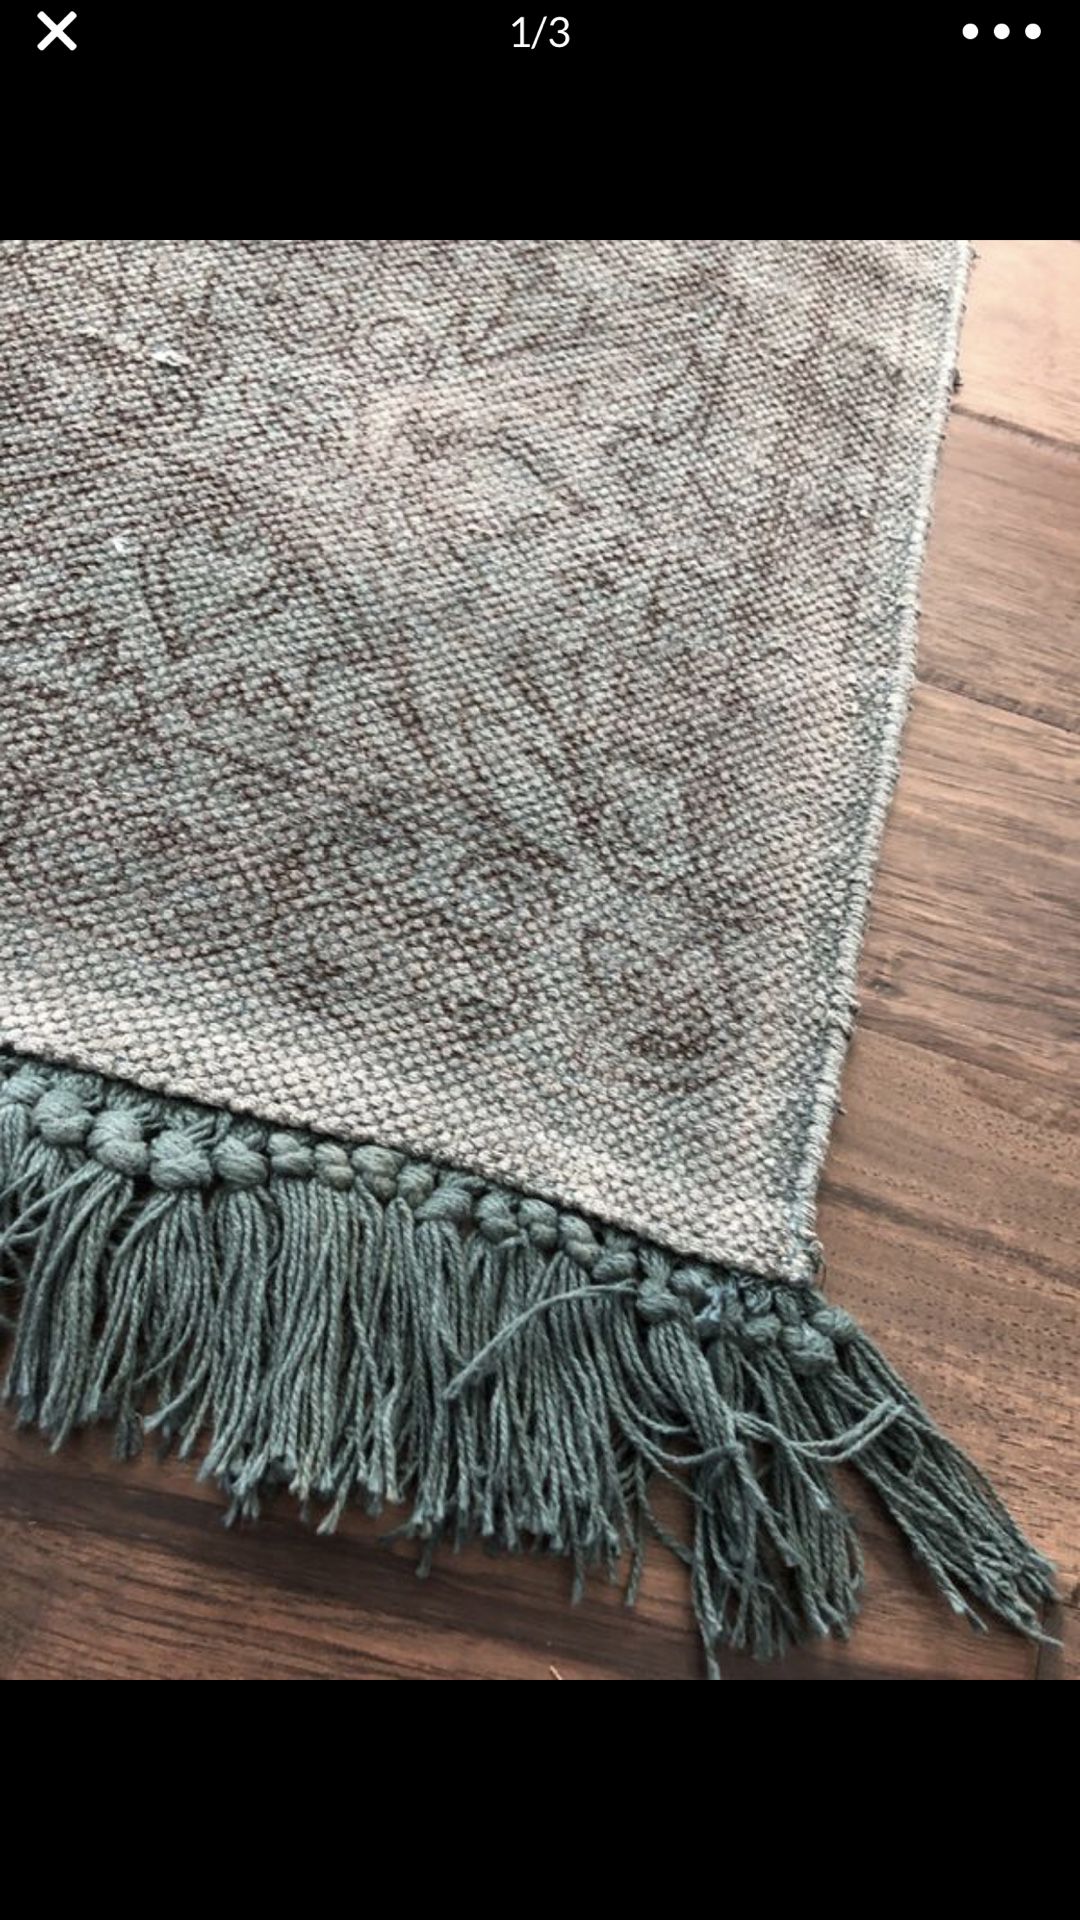 Teal dhurrie/flat weave bohemian rug 9x12